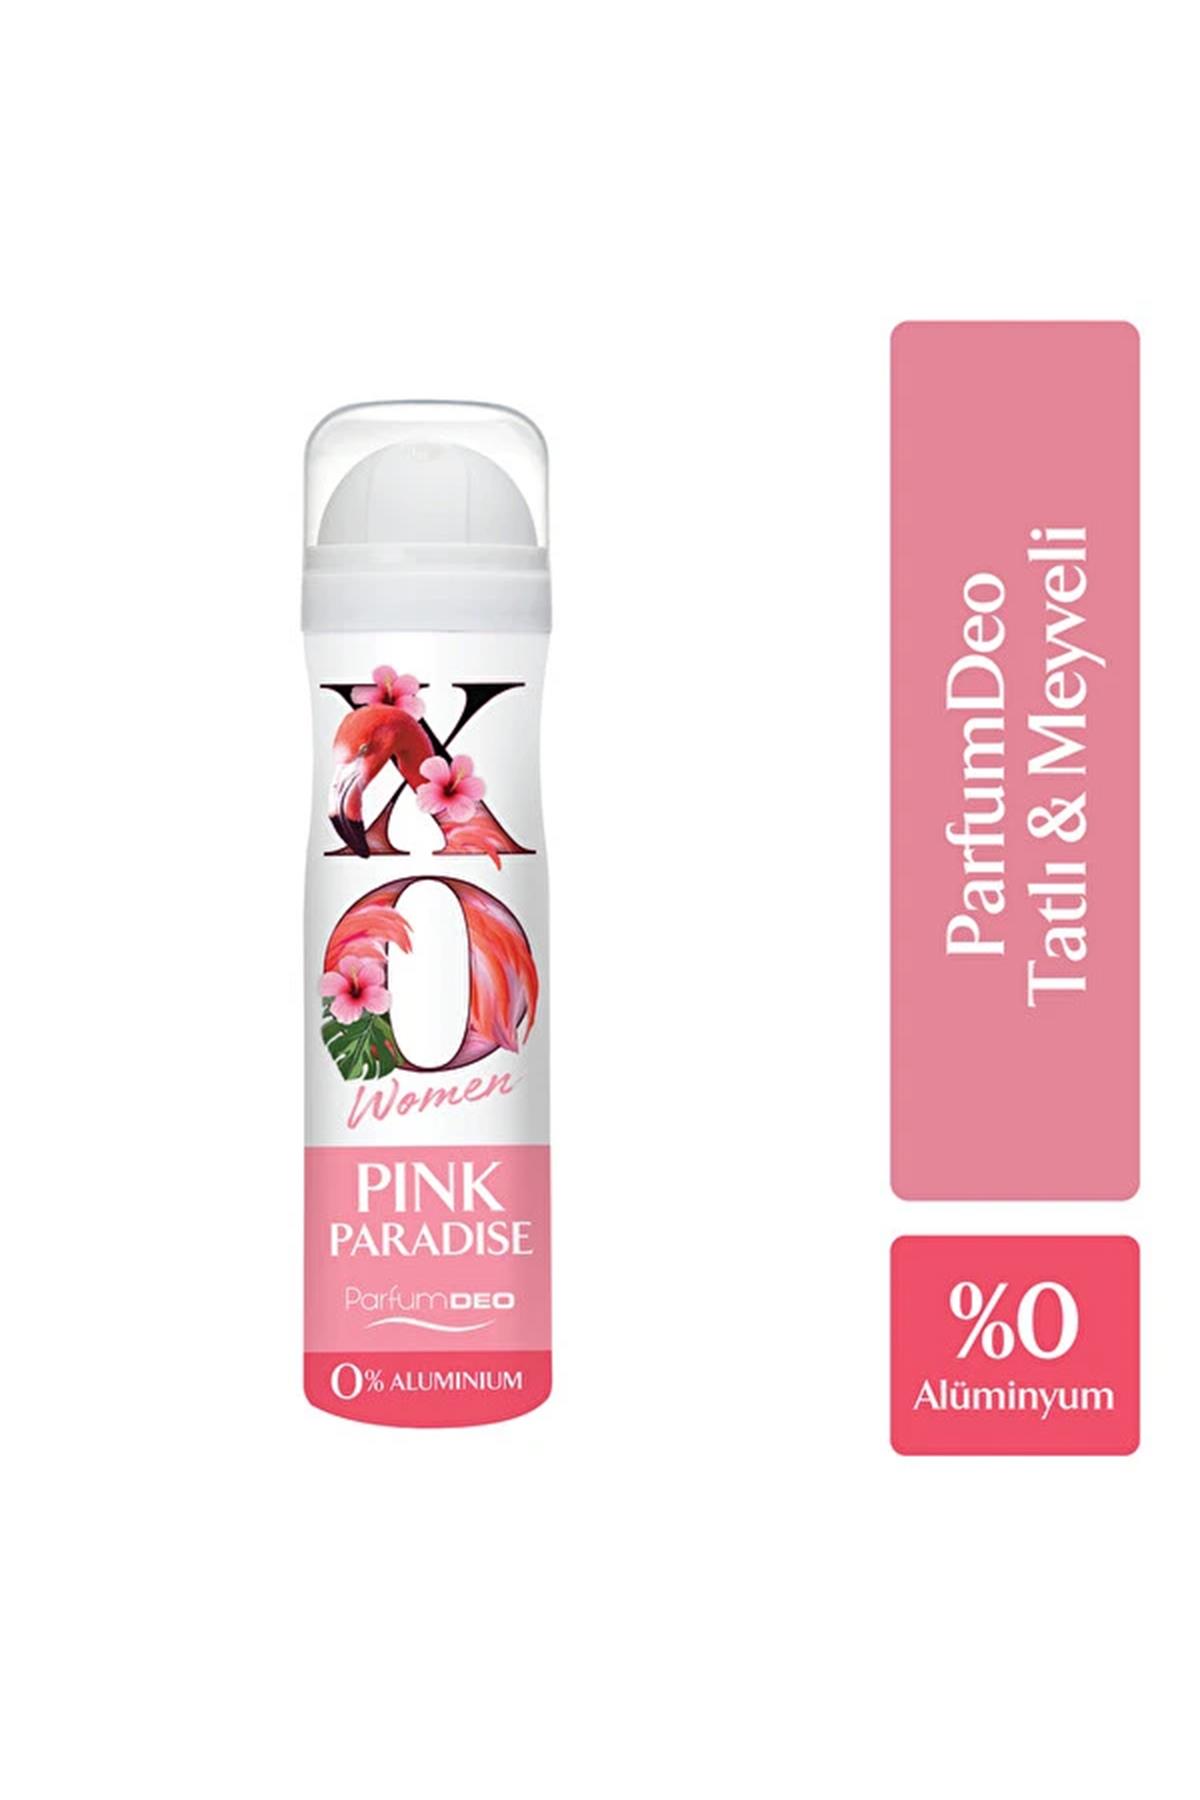 xo-deodorant-kadin-pink-paradise-150-ml-9428-1.jpg